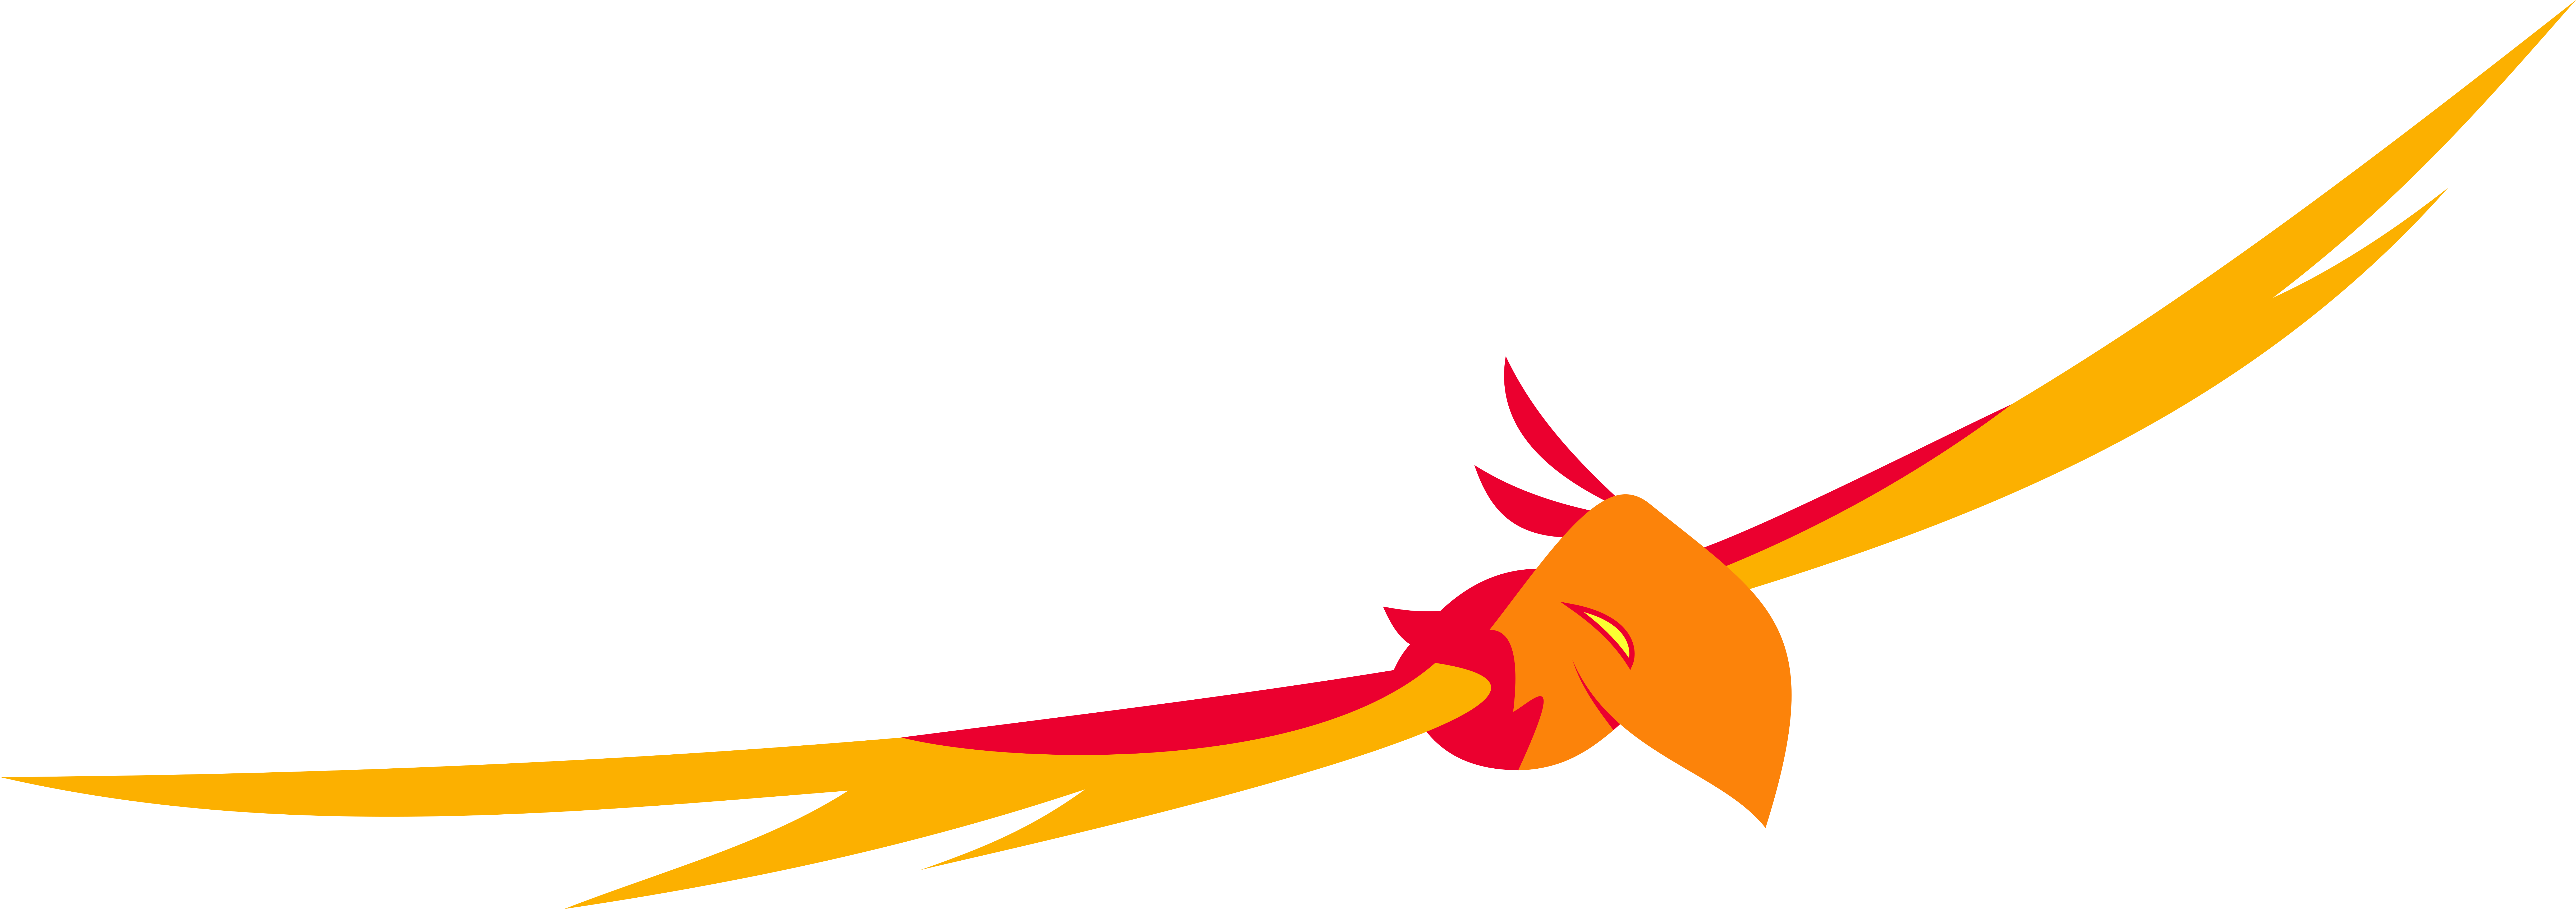 Phenix Chasing Spike 2 By Imageconstructor Phenix Chasing - My Little Pony Phoenix Birds (9743x3439)